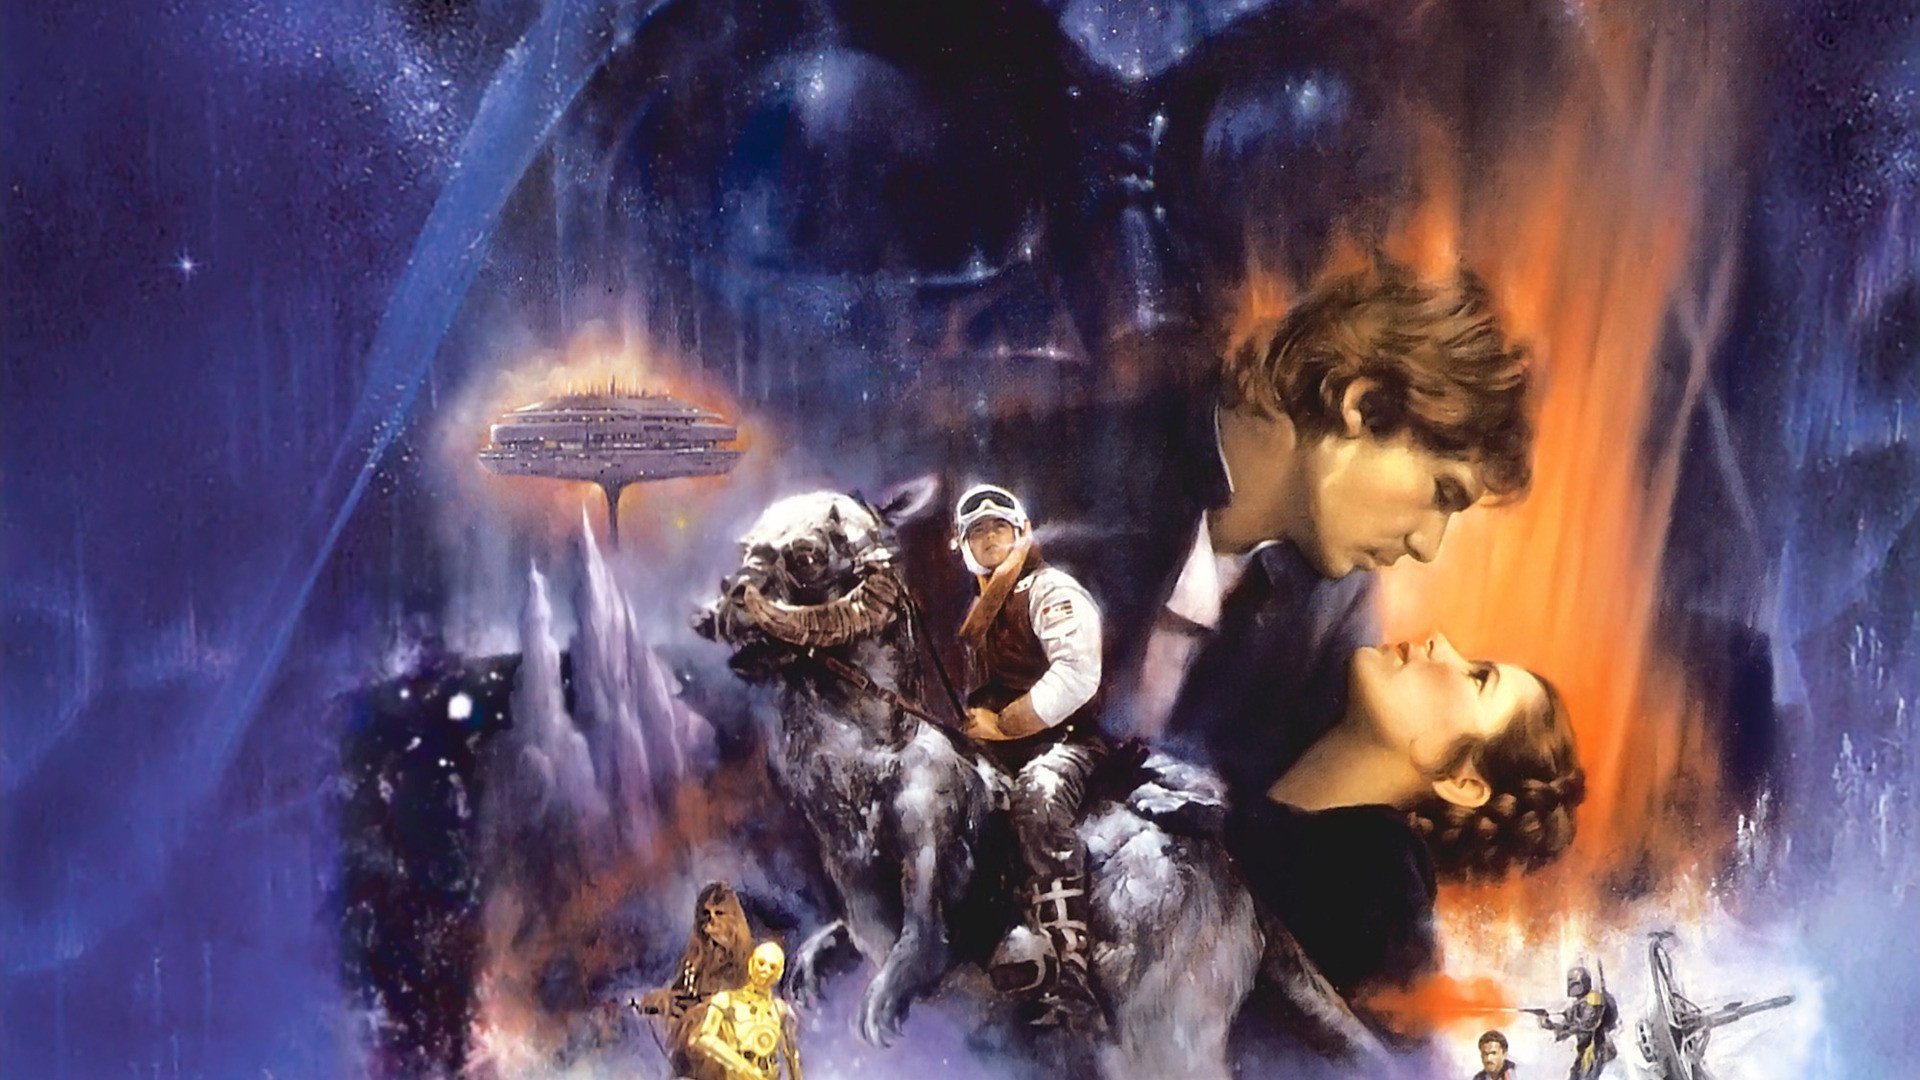 Movie Star Wars Episode V The Empire Strikes Back 1920x1080